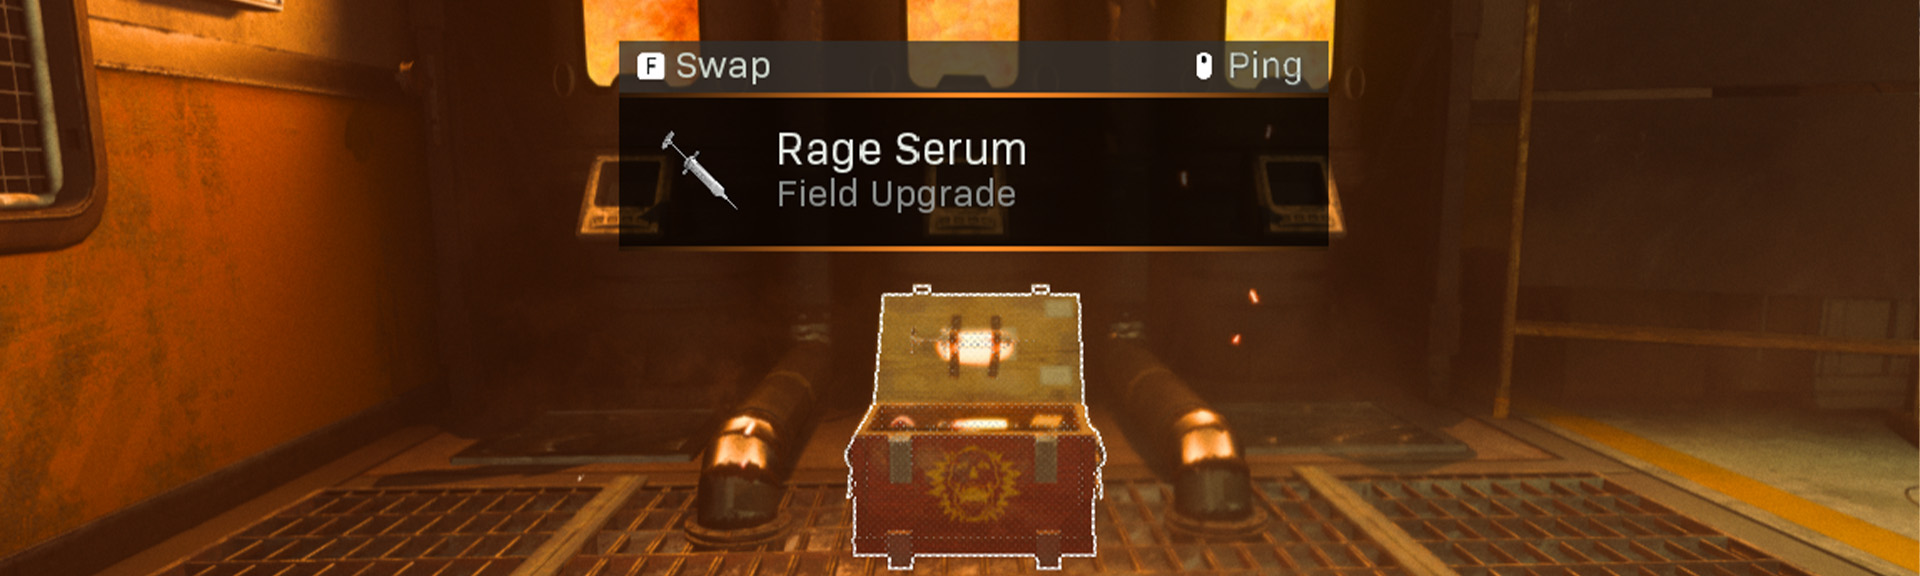 The new Rage Serum lootable item